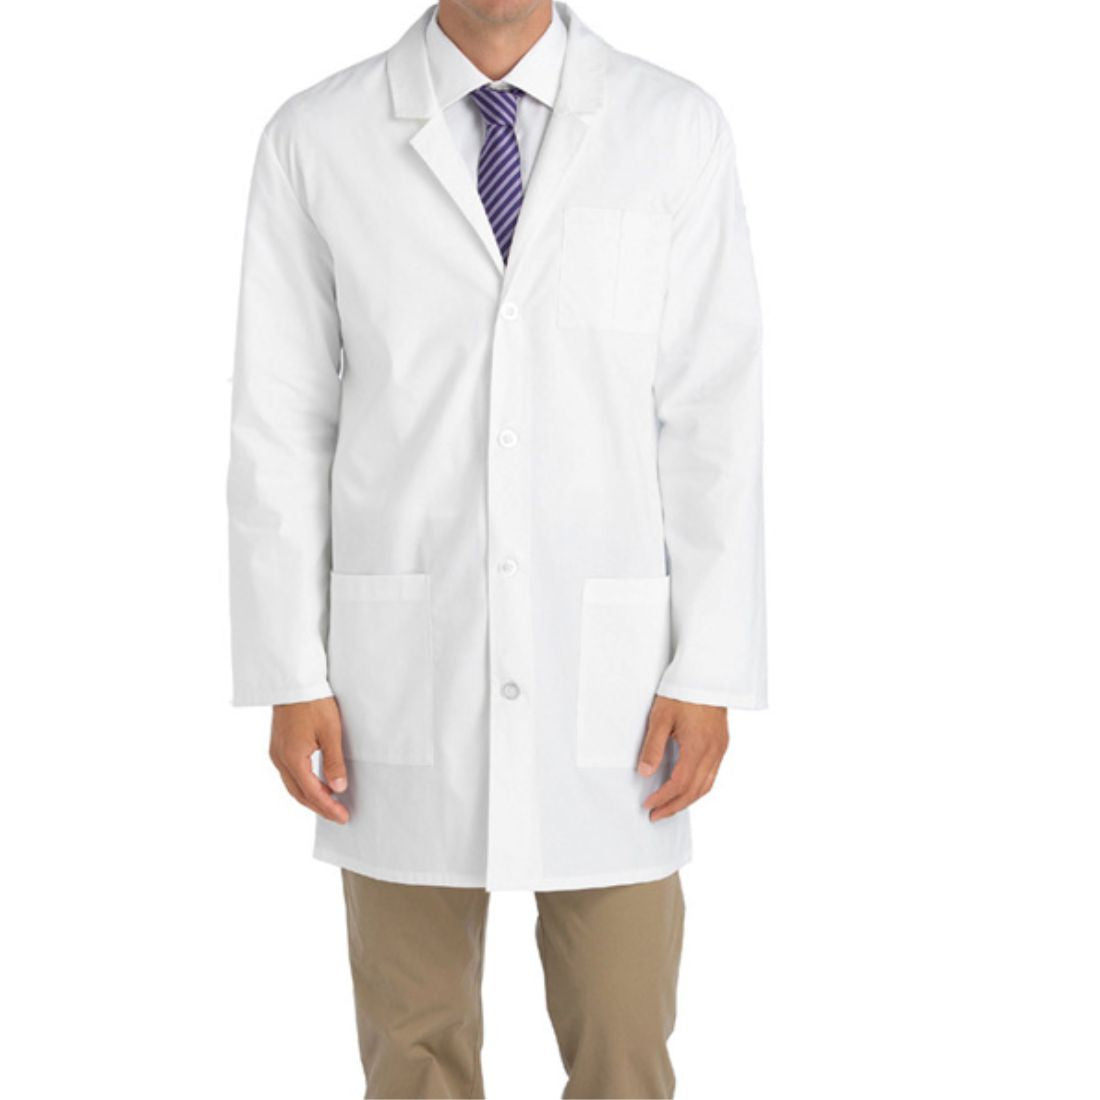 Doctor coat / Lab coat (Full sleeve)